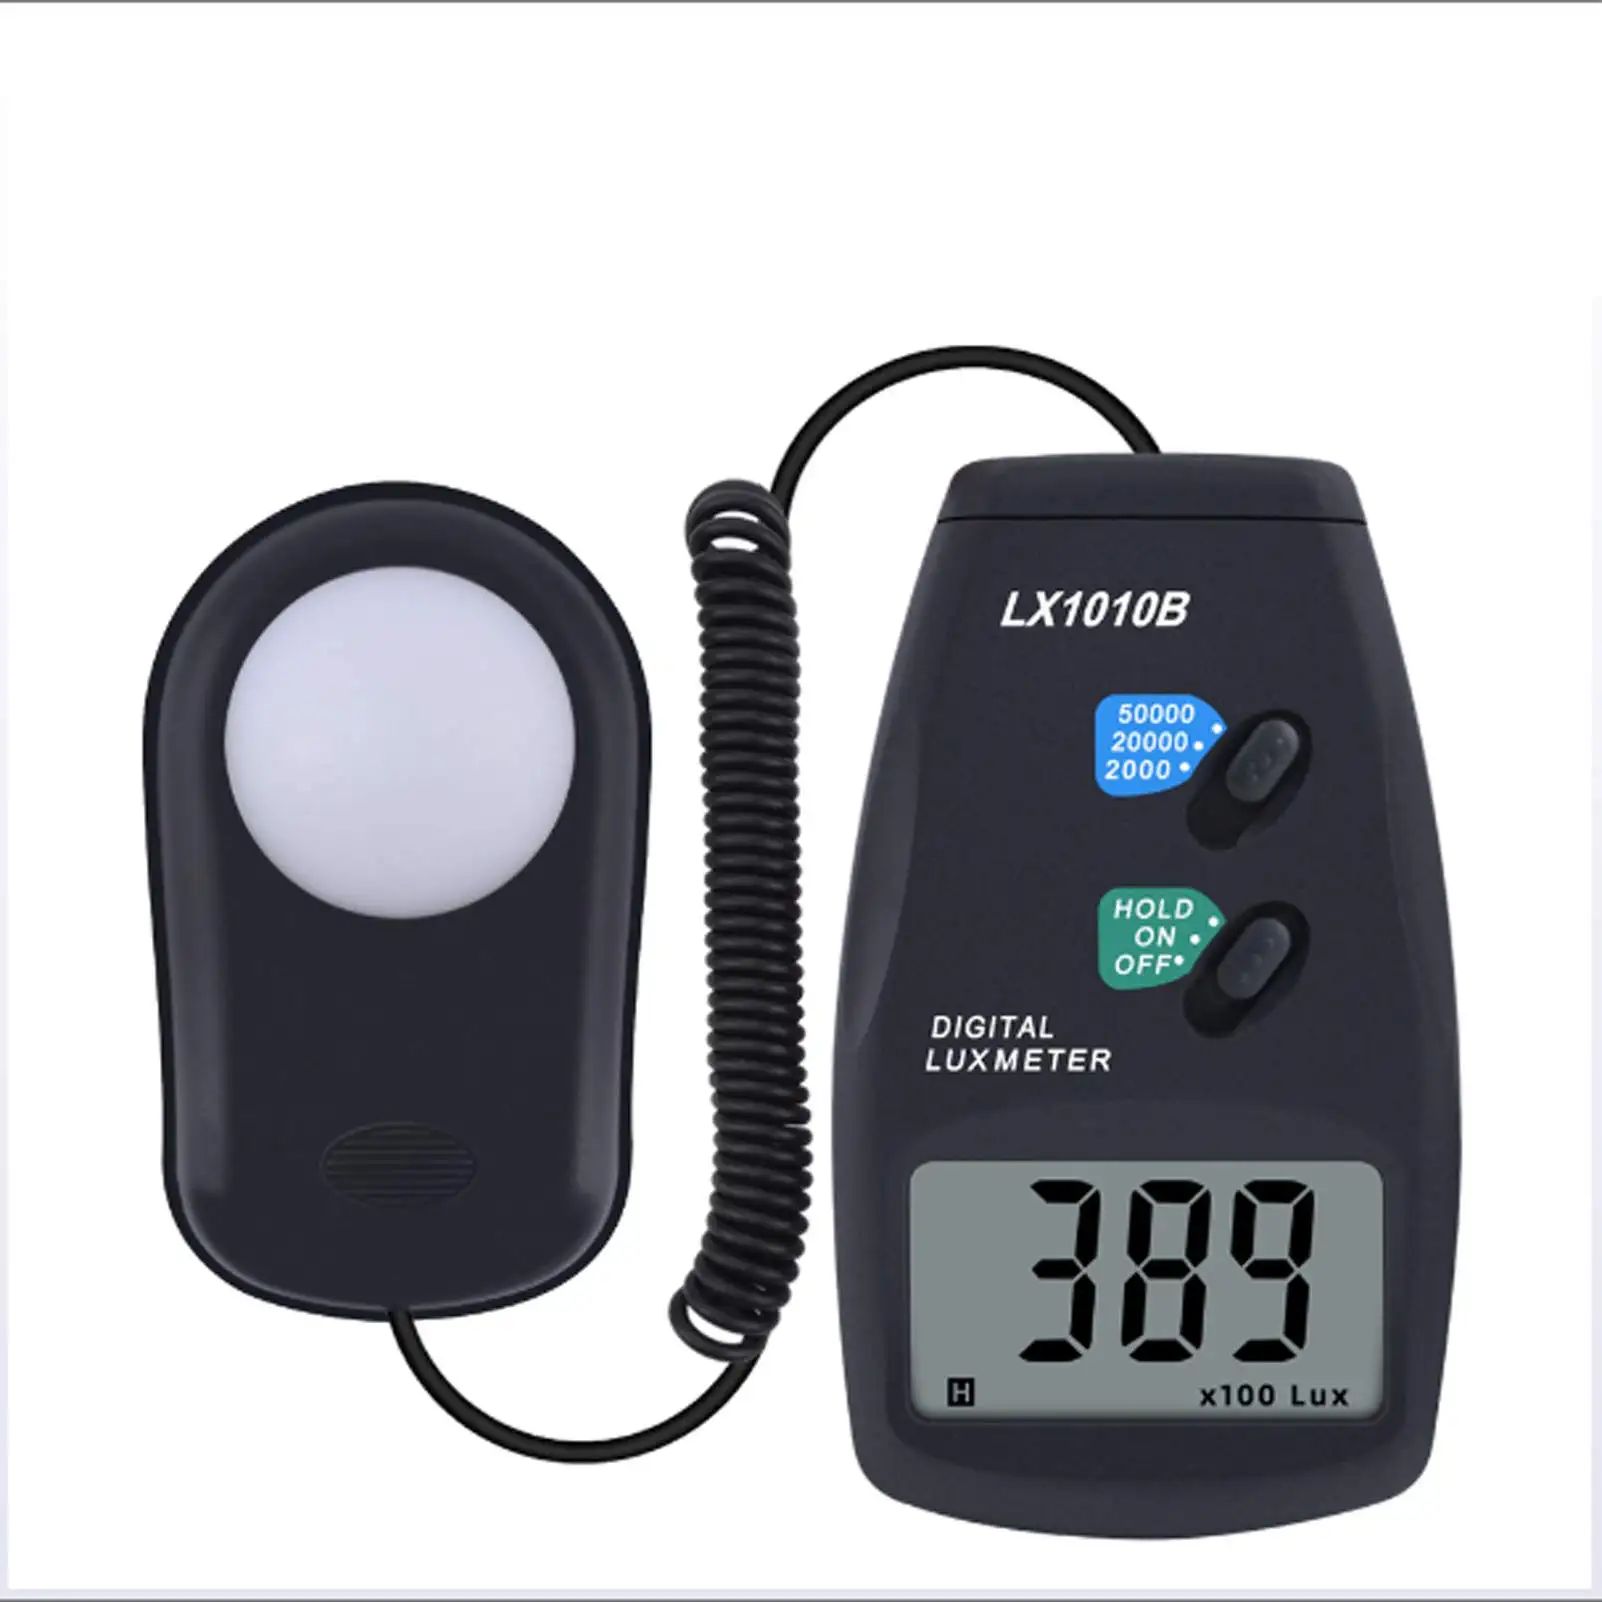 Digital Luxmeter Digital Illuminance Light Meter Luxmeter with LCD Display 0-50,000 Lux Range (with 9V Battery) LX-1010B